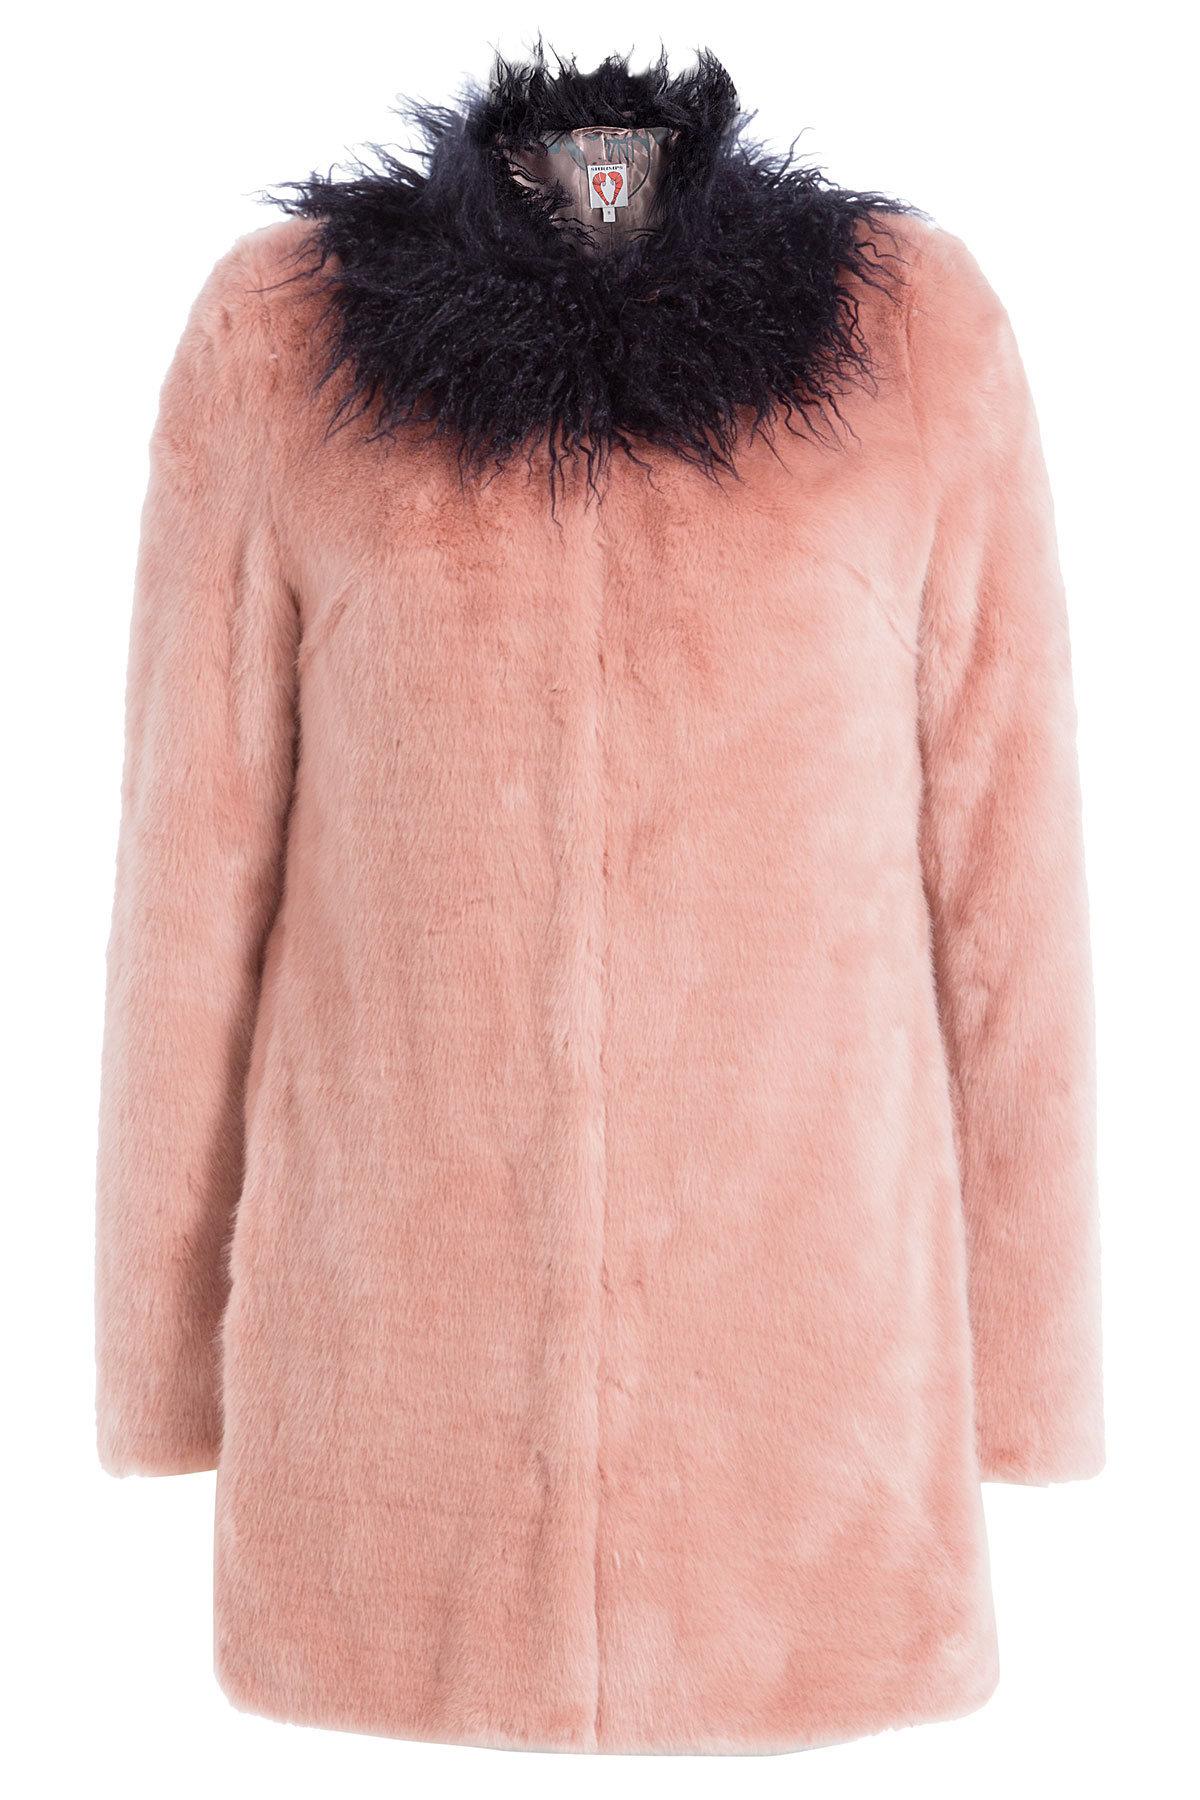 Lyst - Shrimps Faux Fur Coat in Pink